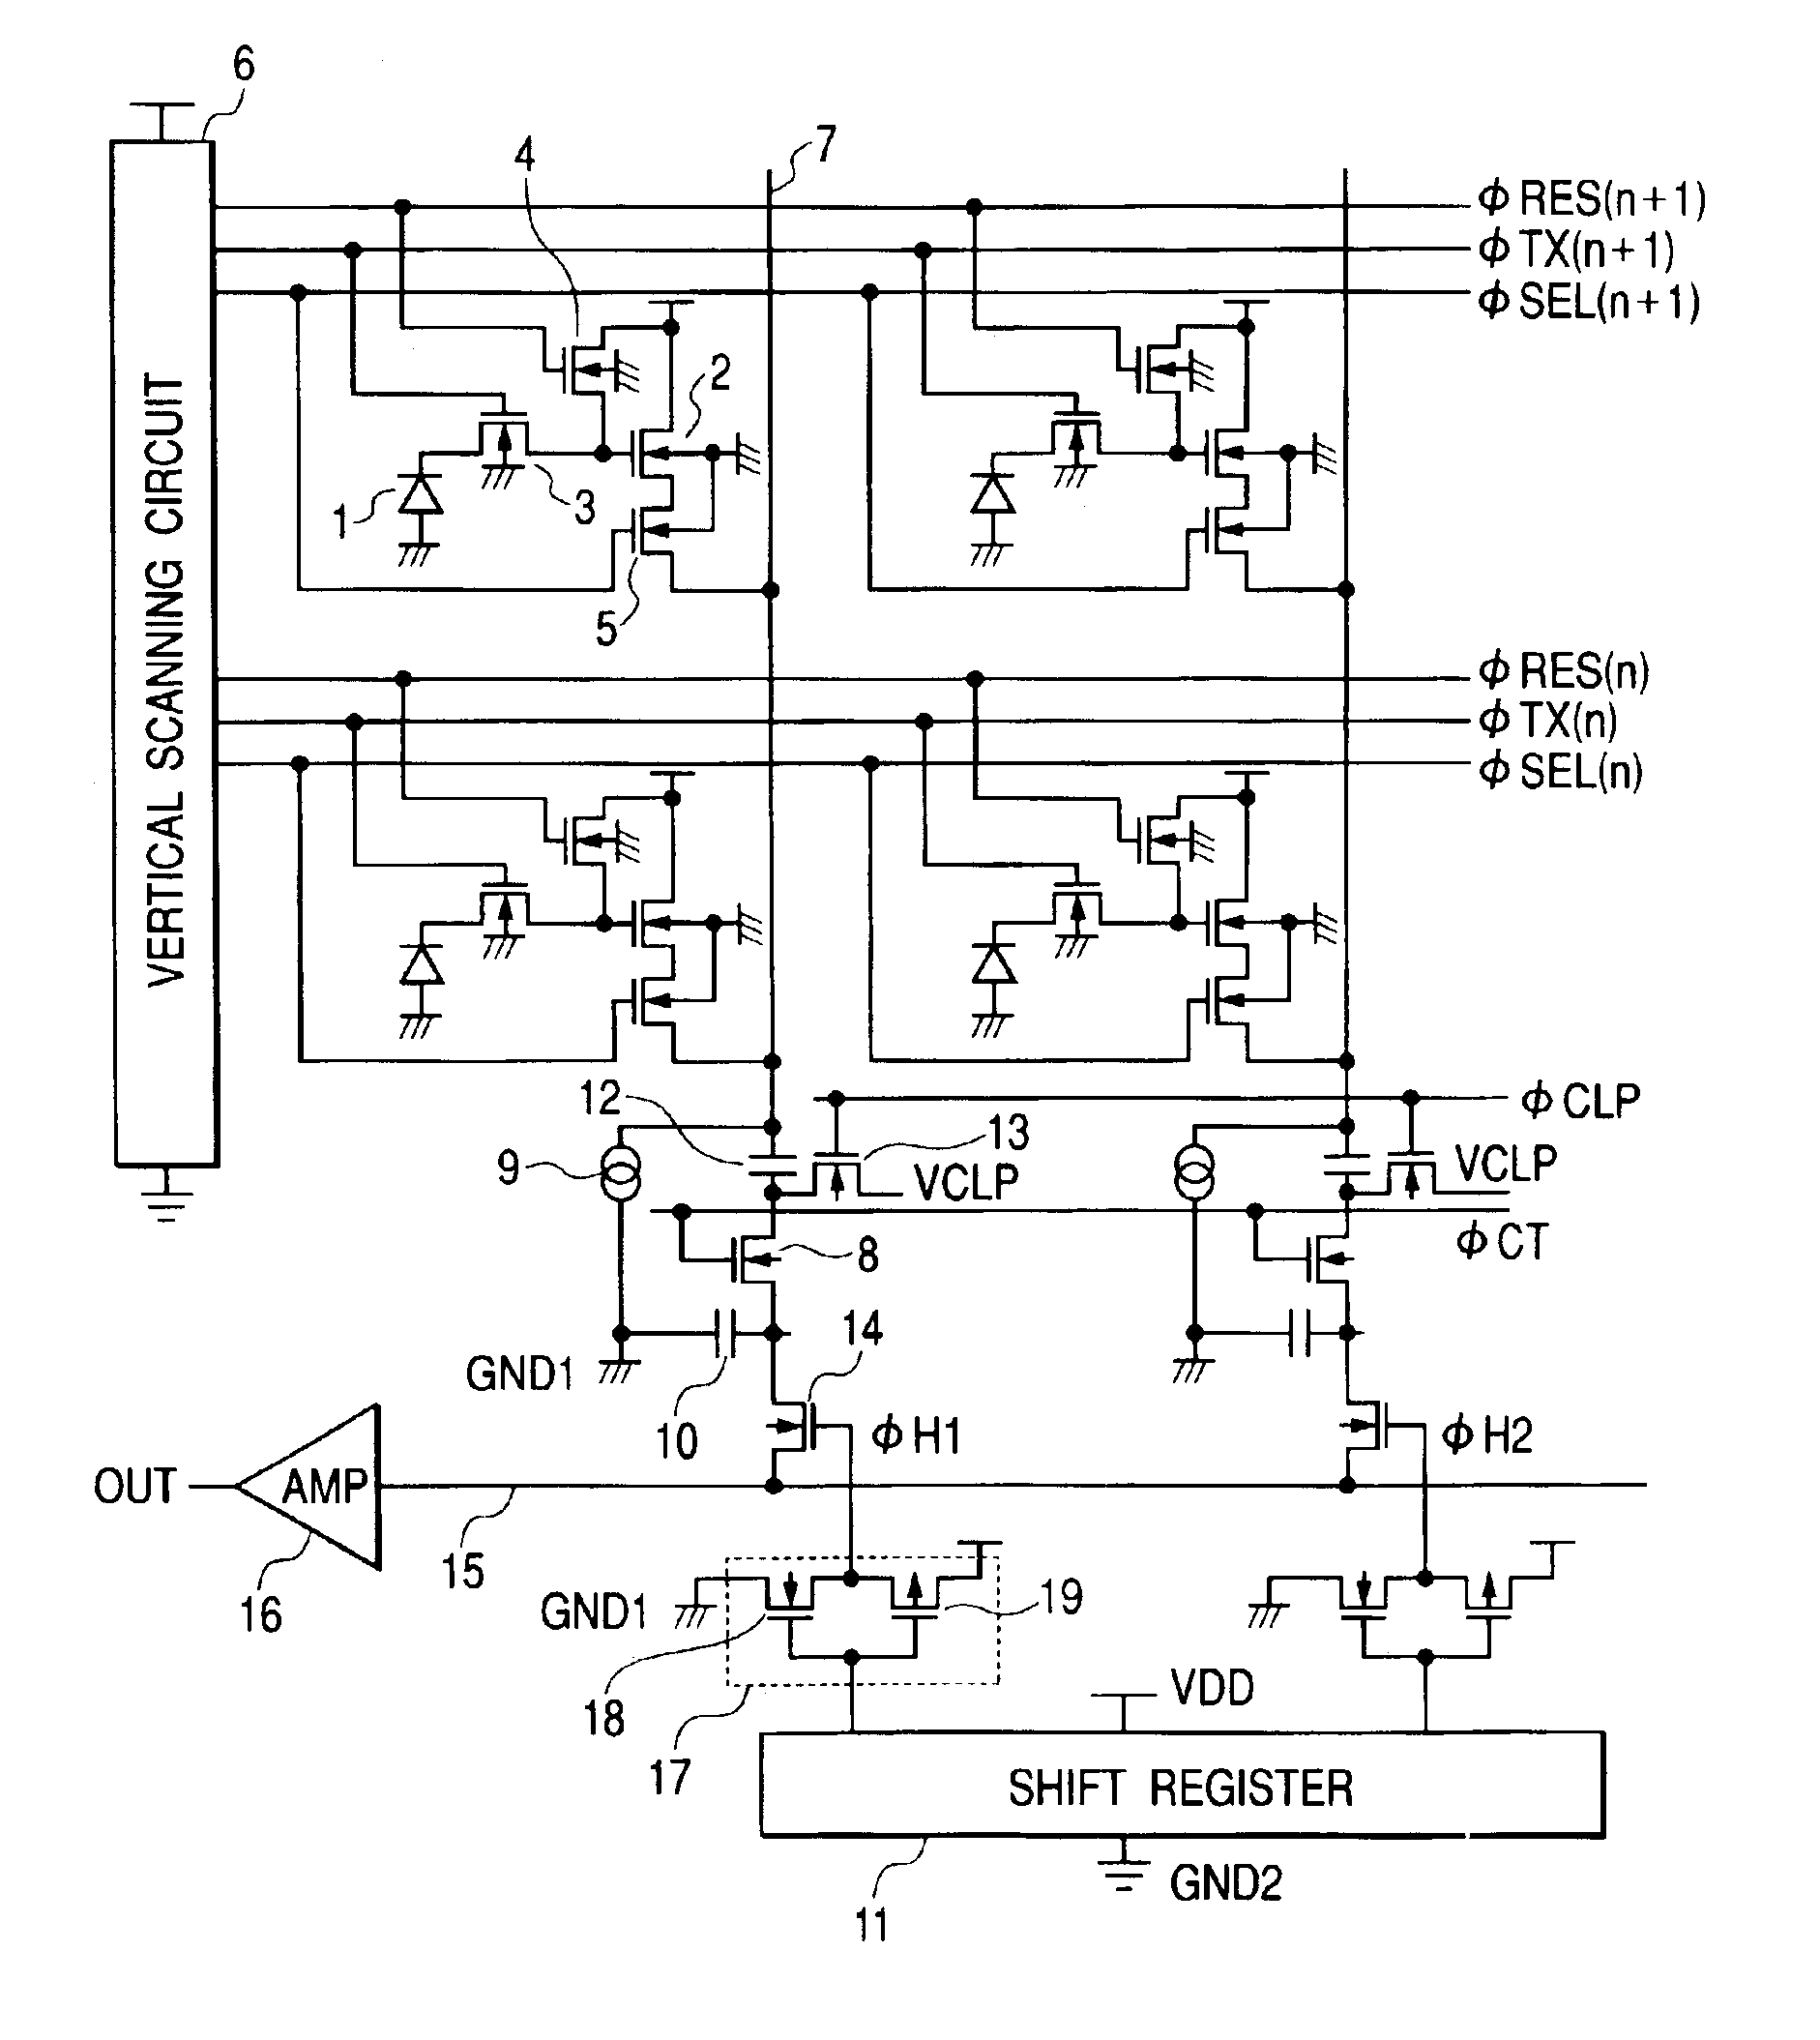 Photoelectric conversion device